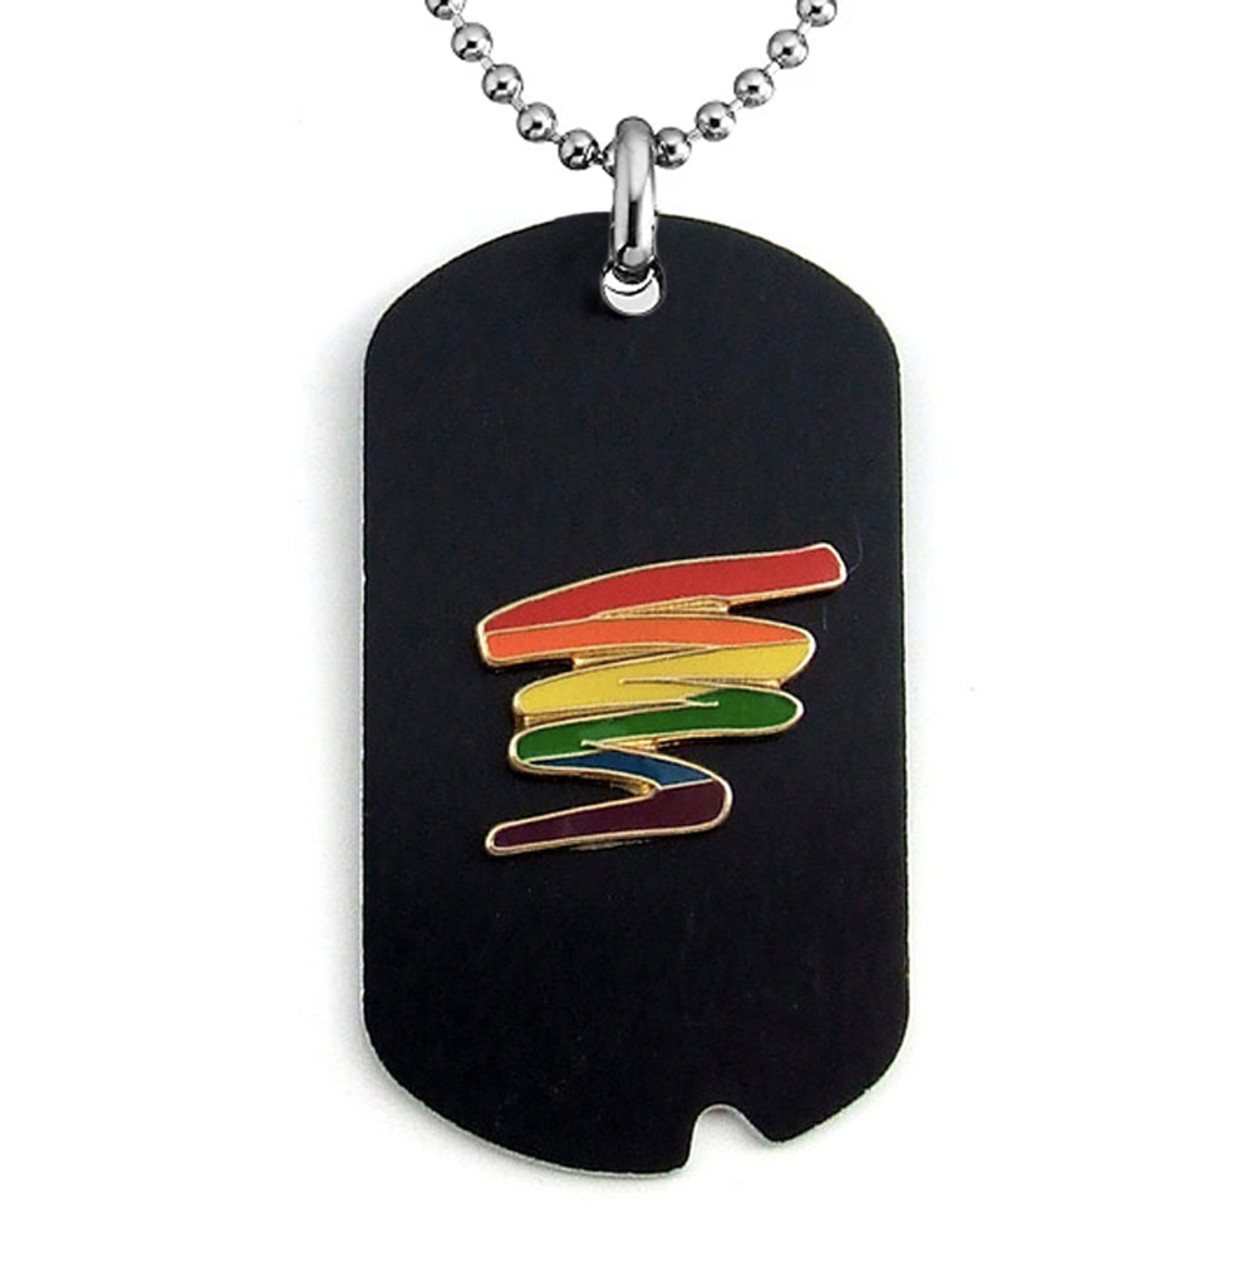 
gay pendants, rainbow pendants, lesbian pendants,  pride pendants, gay pride jewelry, lesbian pride jewelry, gay pride pendants, rainbow flag pendants, lesbian pride pendants,  pride pendant, lesbian jewellery